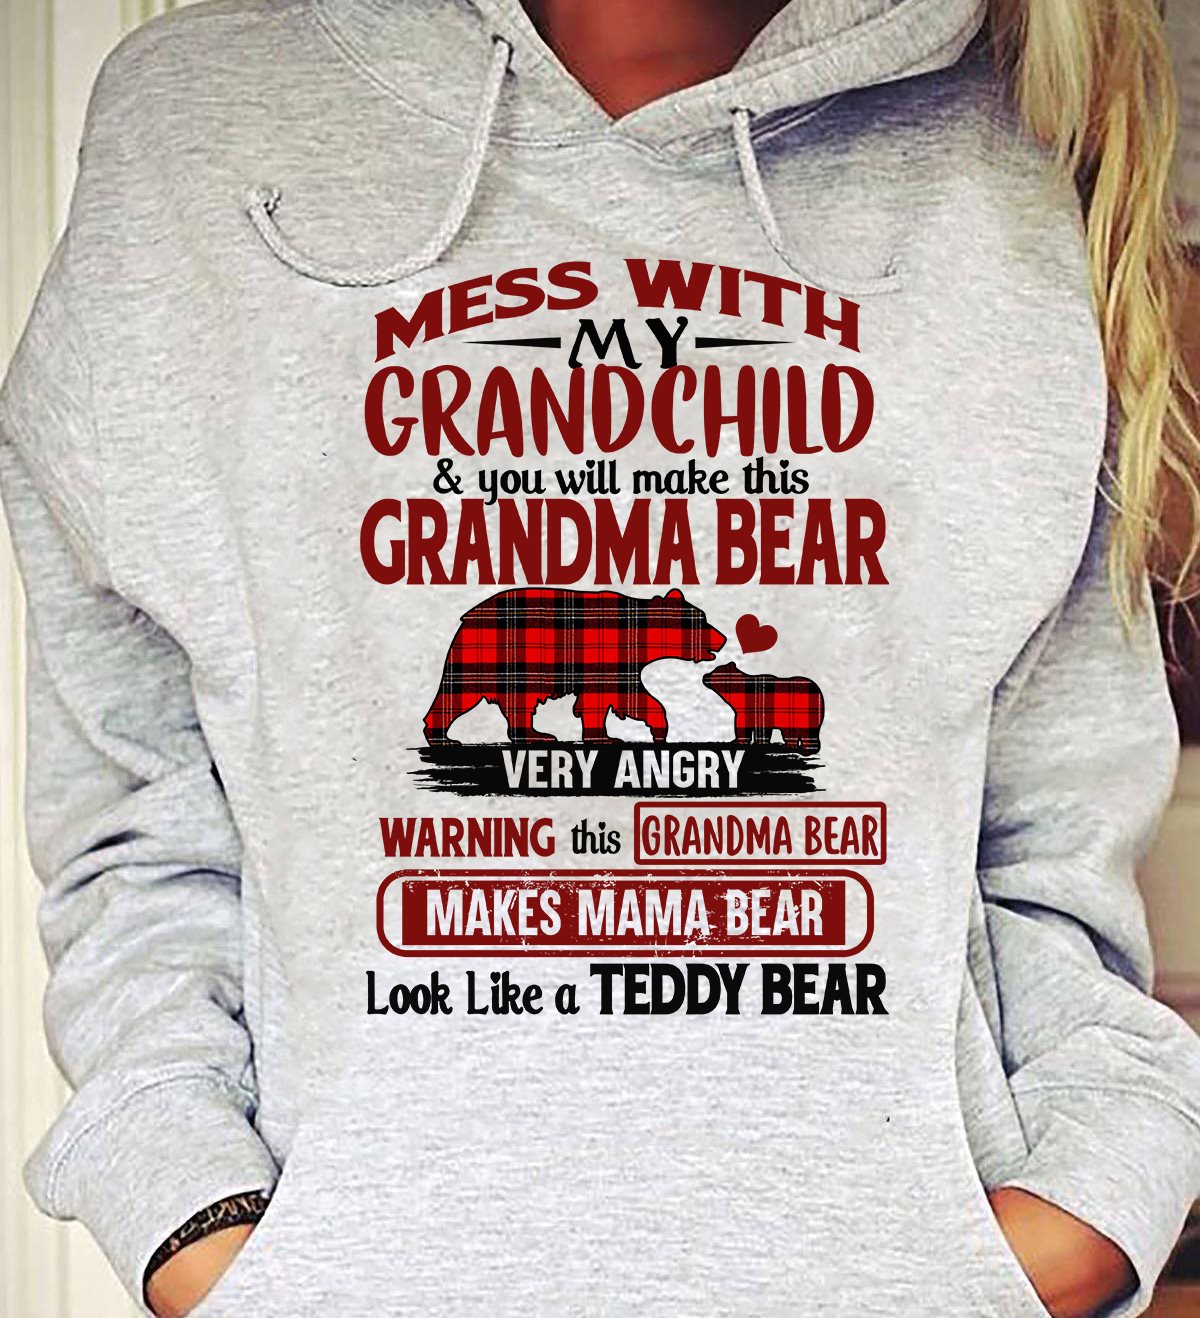 Mess with my grandchild and you will make this grandma bear very angry - Grandma bear